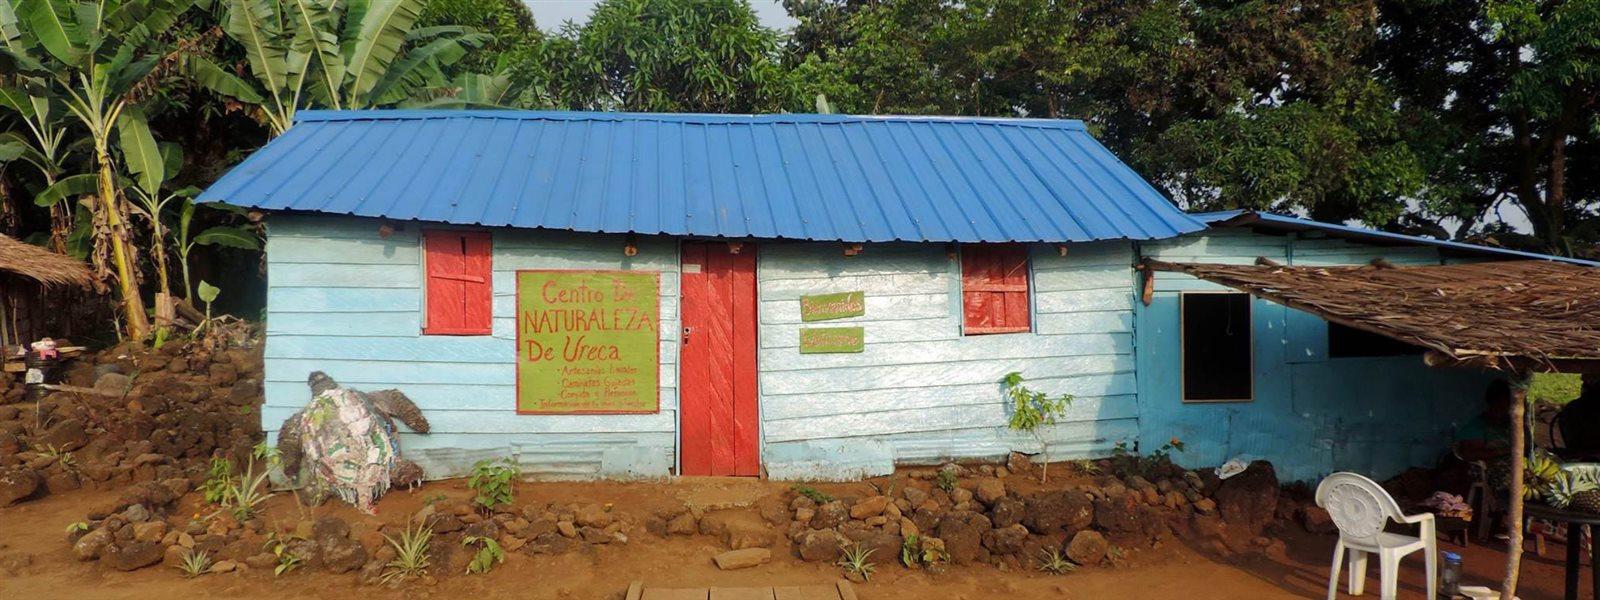 Ureca Nature Center, a community center/store on Bioko in Equatorial Guinea, where Drexel runs the Bioko Biodiversity Protection Program. 